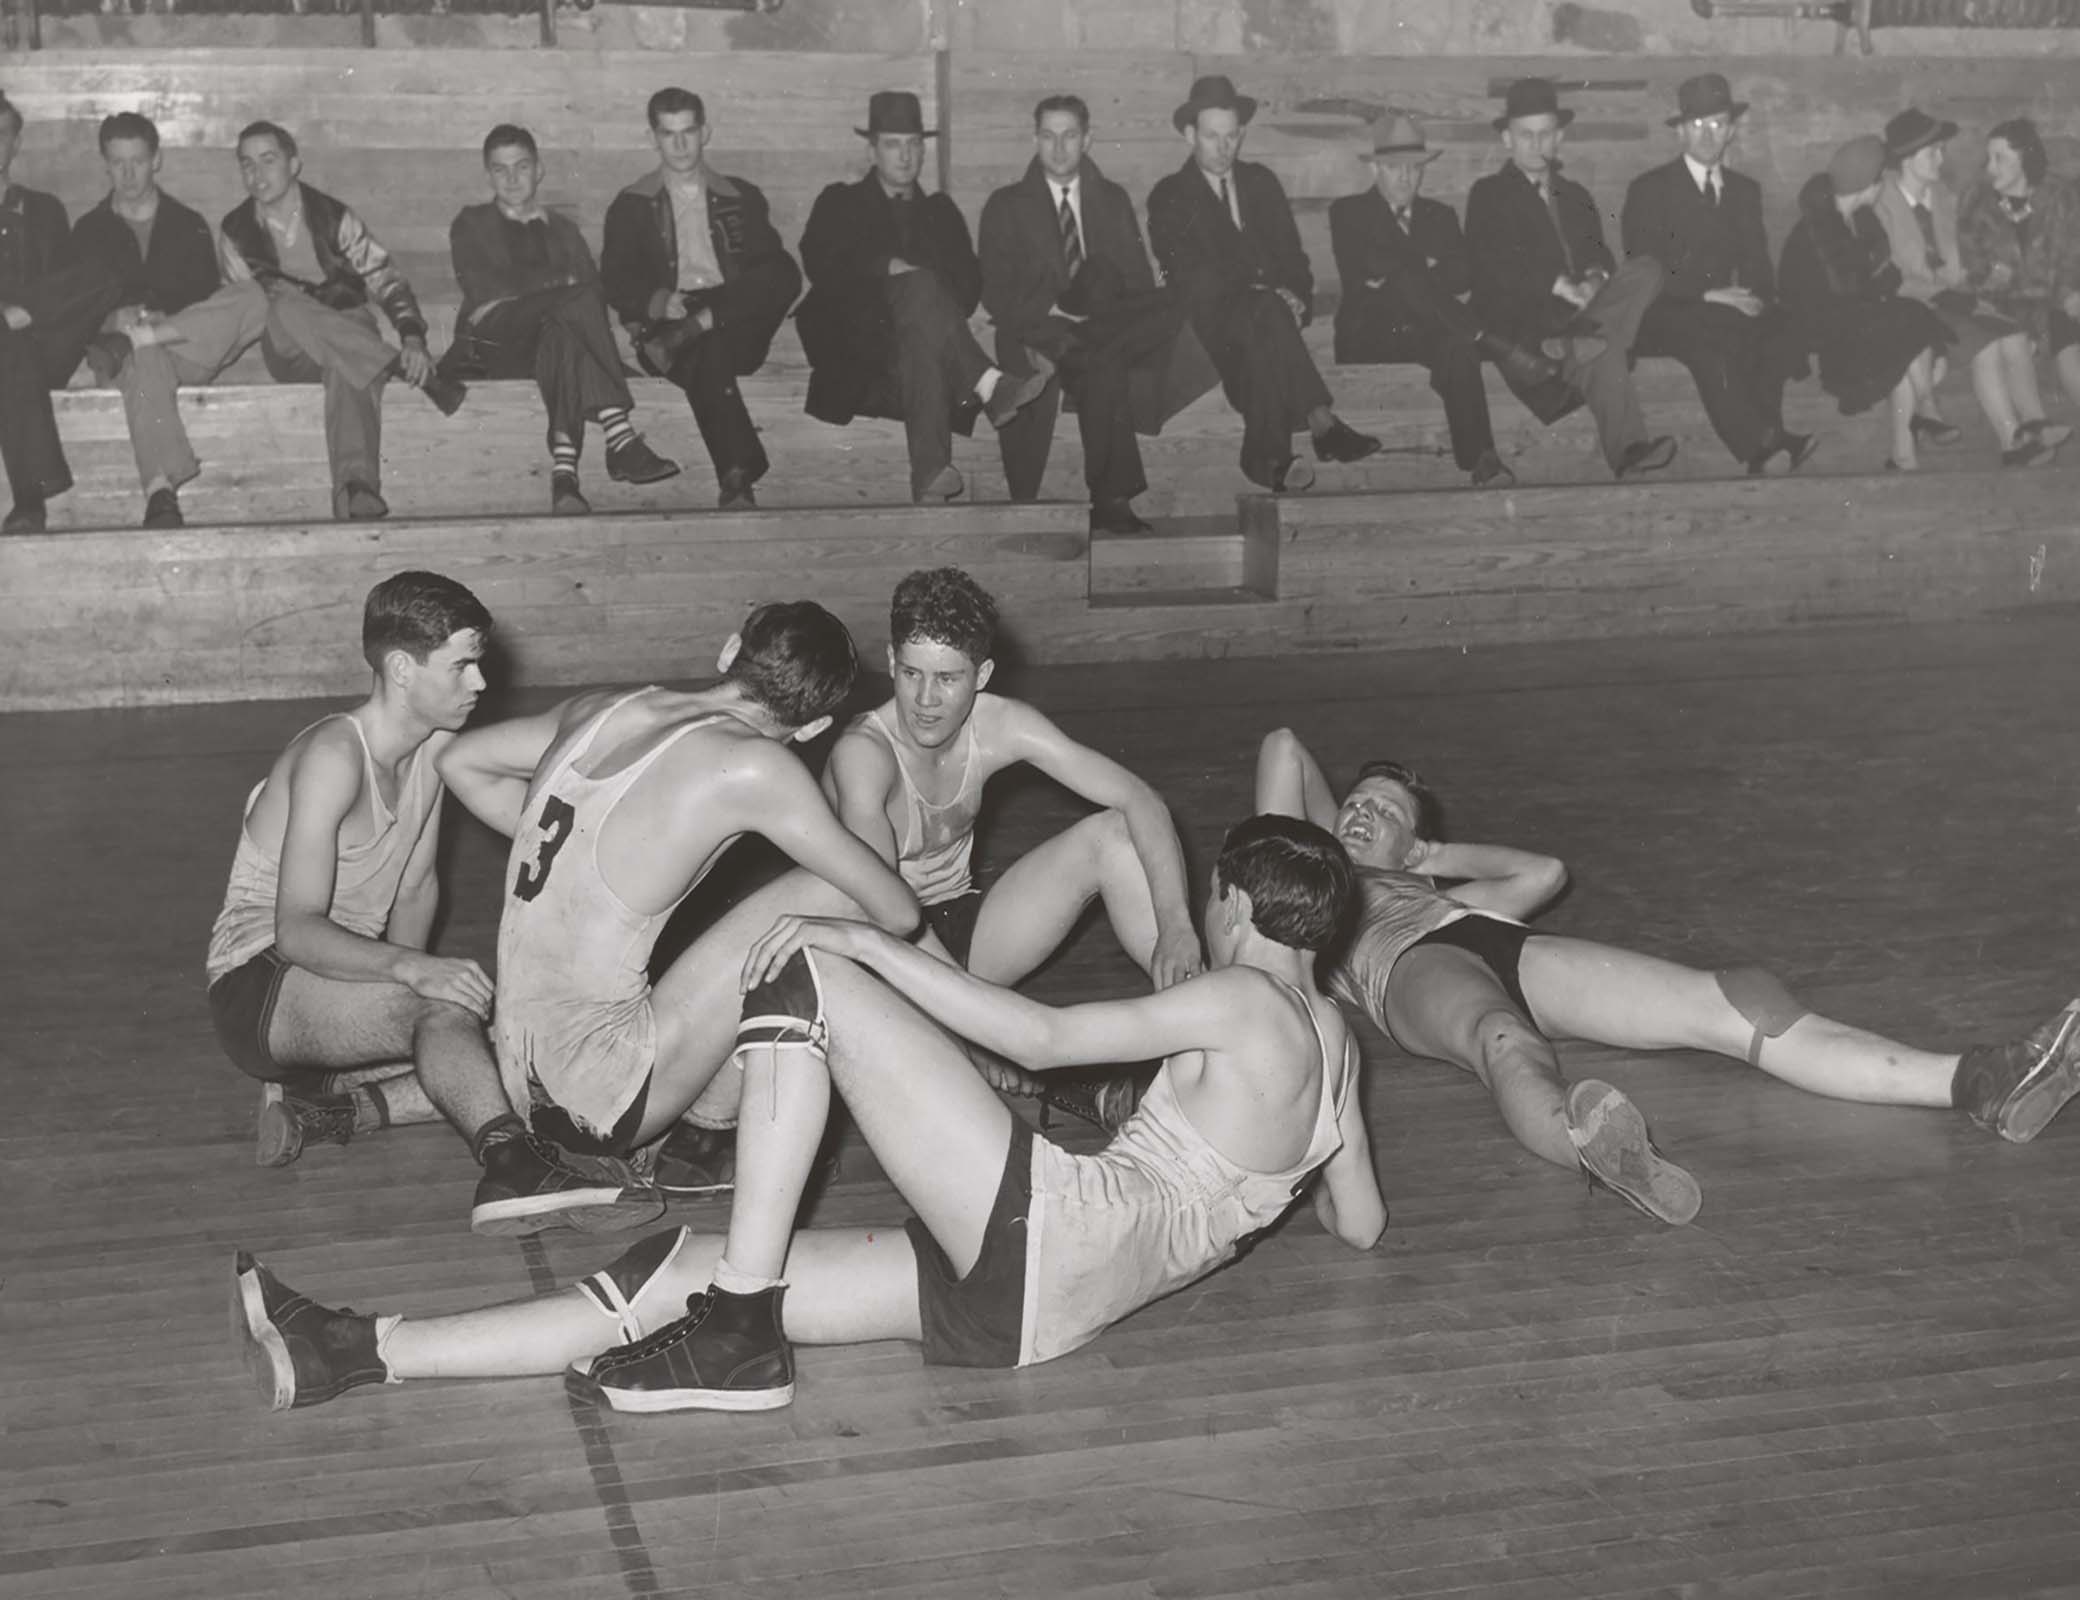 Basketball players resting between periods, Eufaula, Oklahoma, 1940.